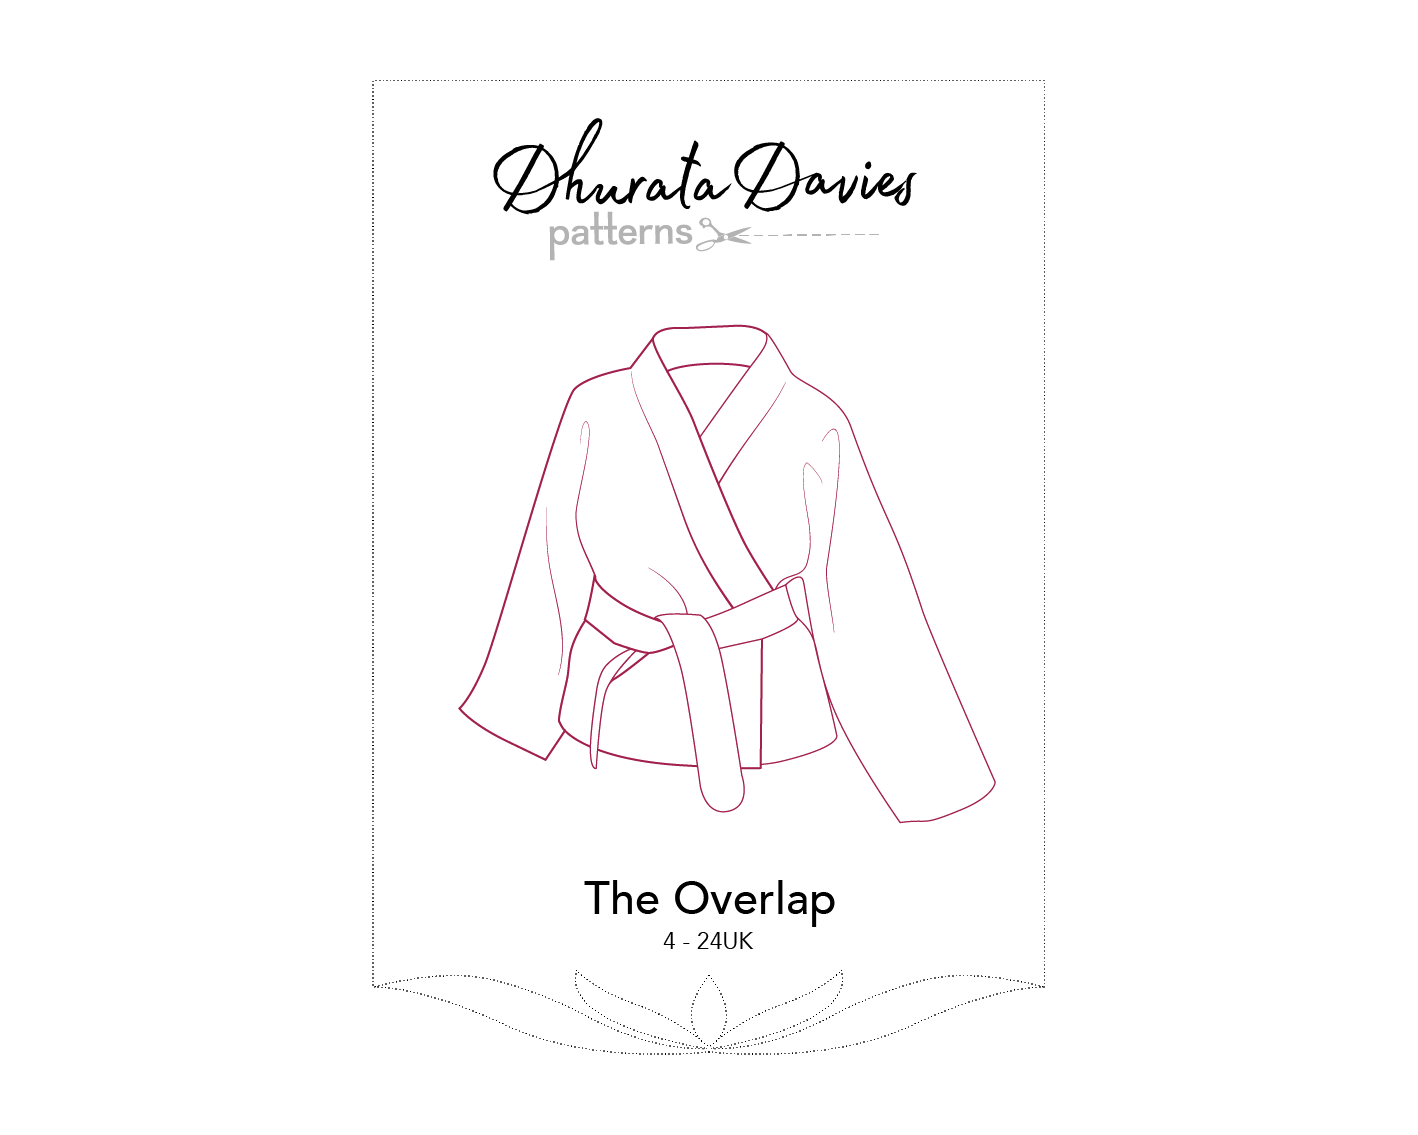 Dhurata Davies Patterns The Overlap Shirt, Dress and Jacket